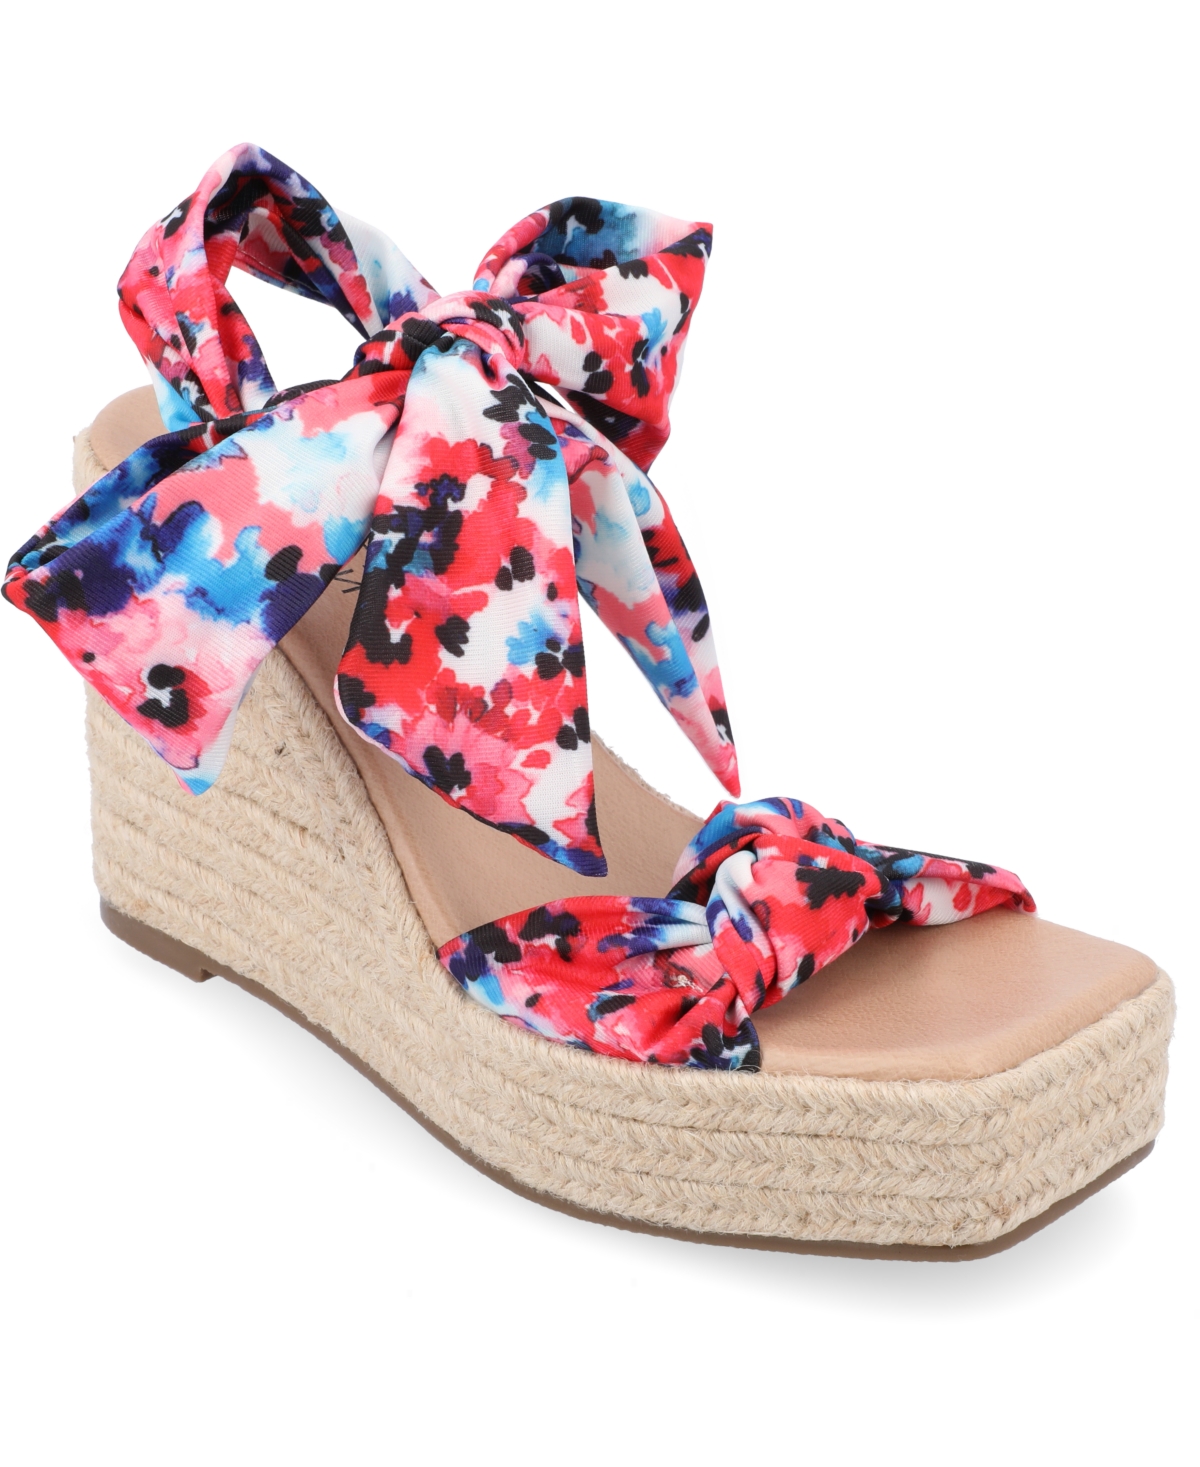 Women's Surria Platform Wedge Sandals - Floral